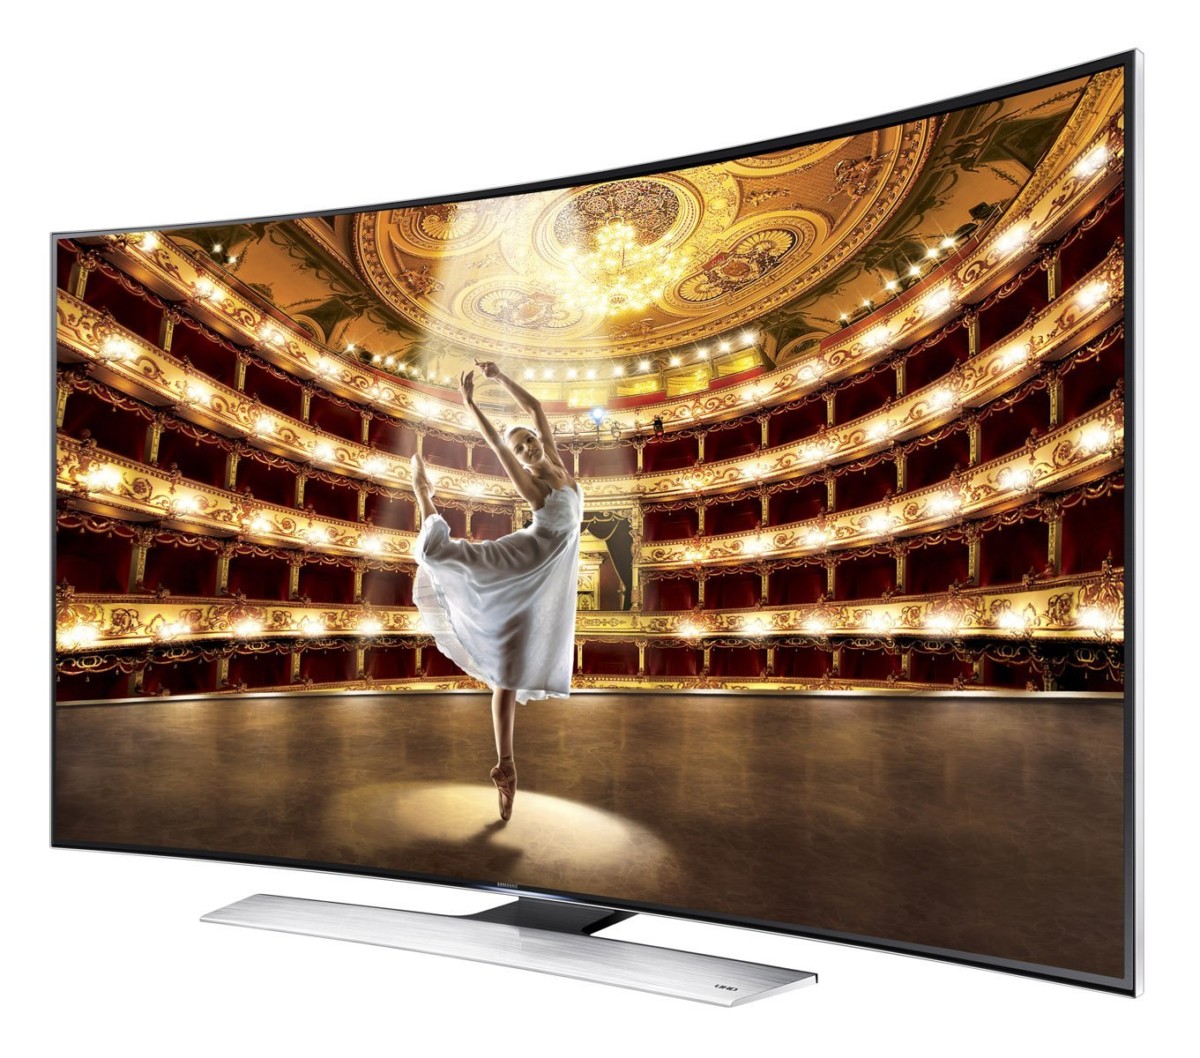 Samsung UN65HU9000 Curved 65 Inch 4K Ultra HD 120Hz 3D Smart LED TV